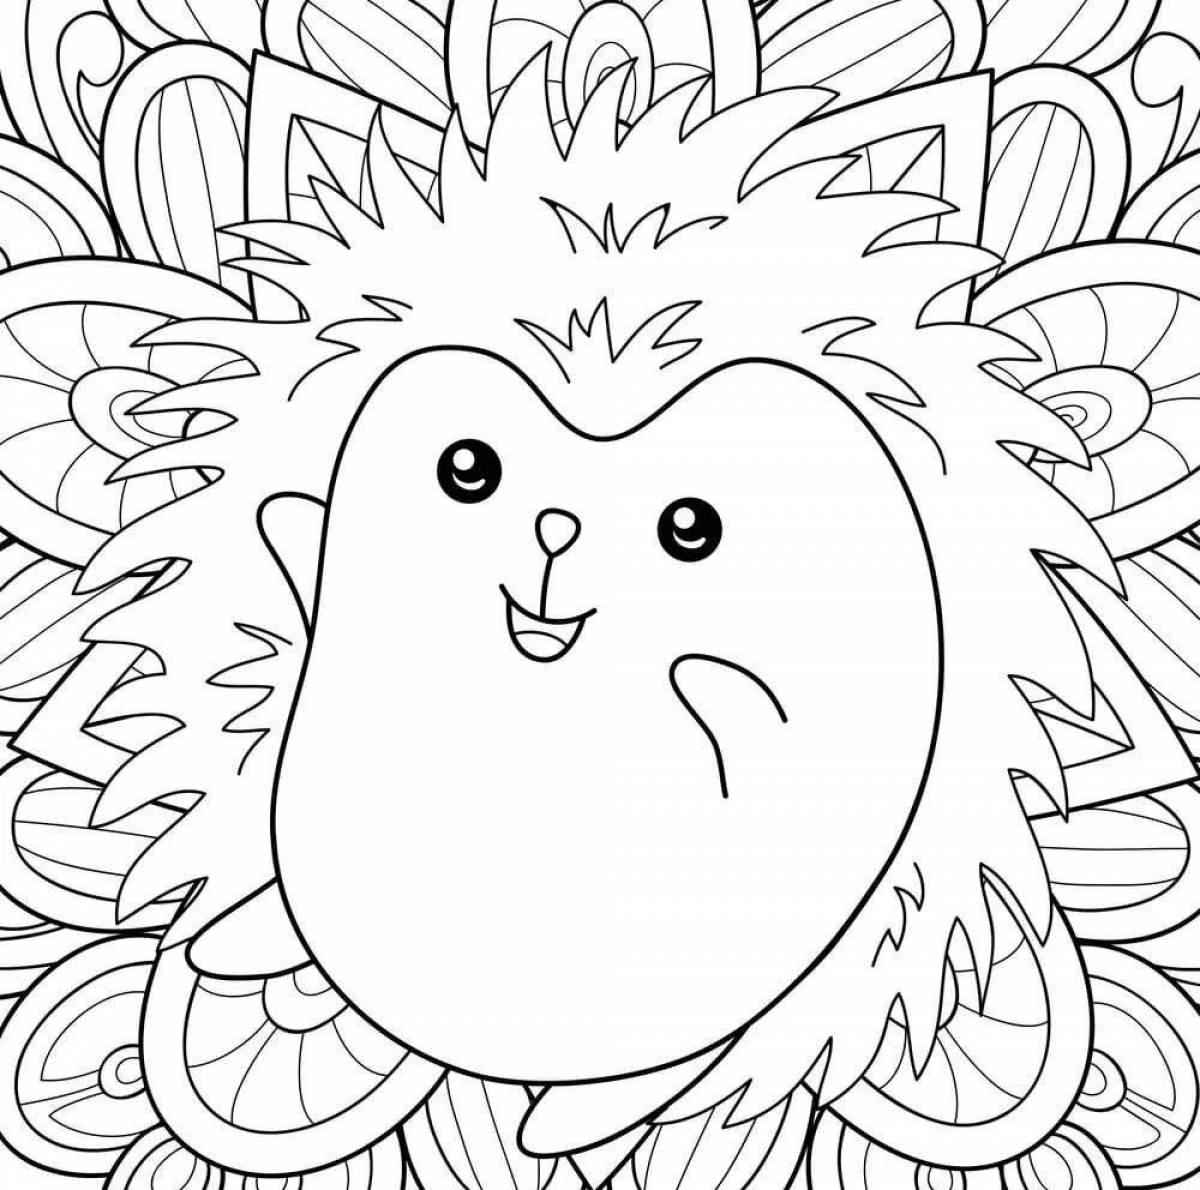 Funny anti-stress hedgehog coloring book